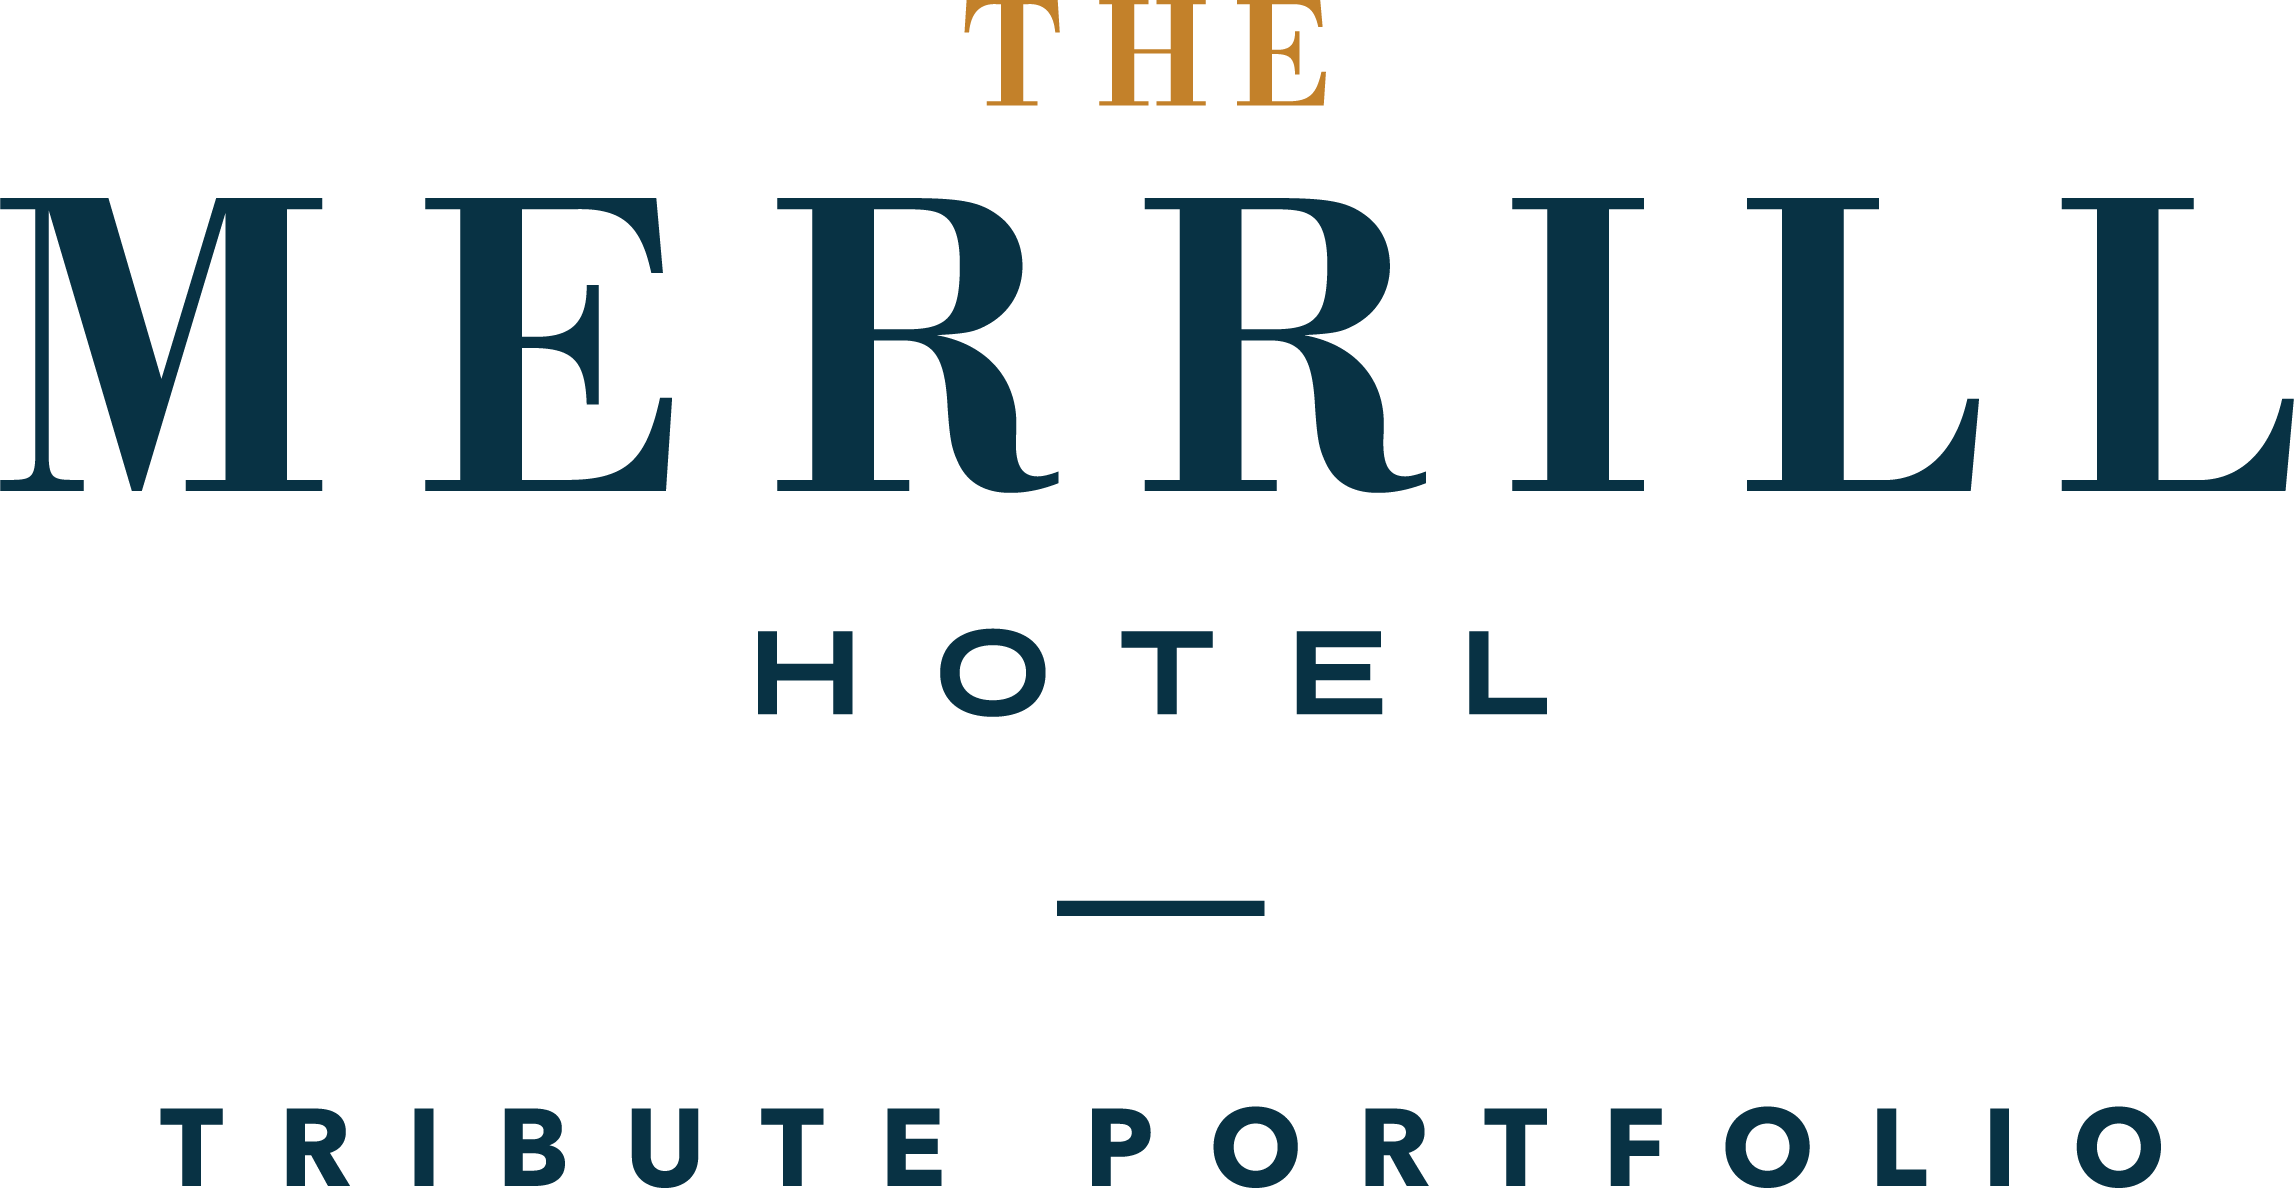 The Merrill Hotel